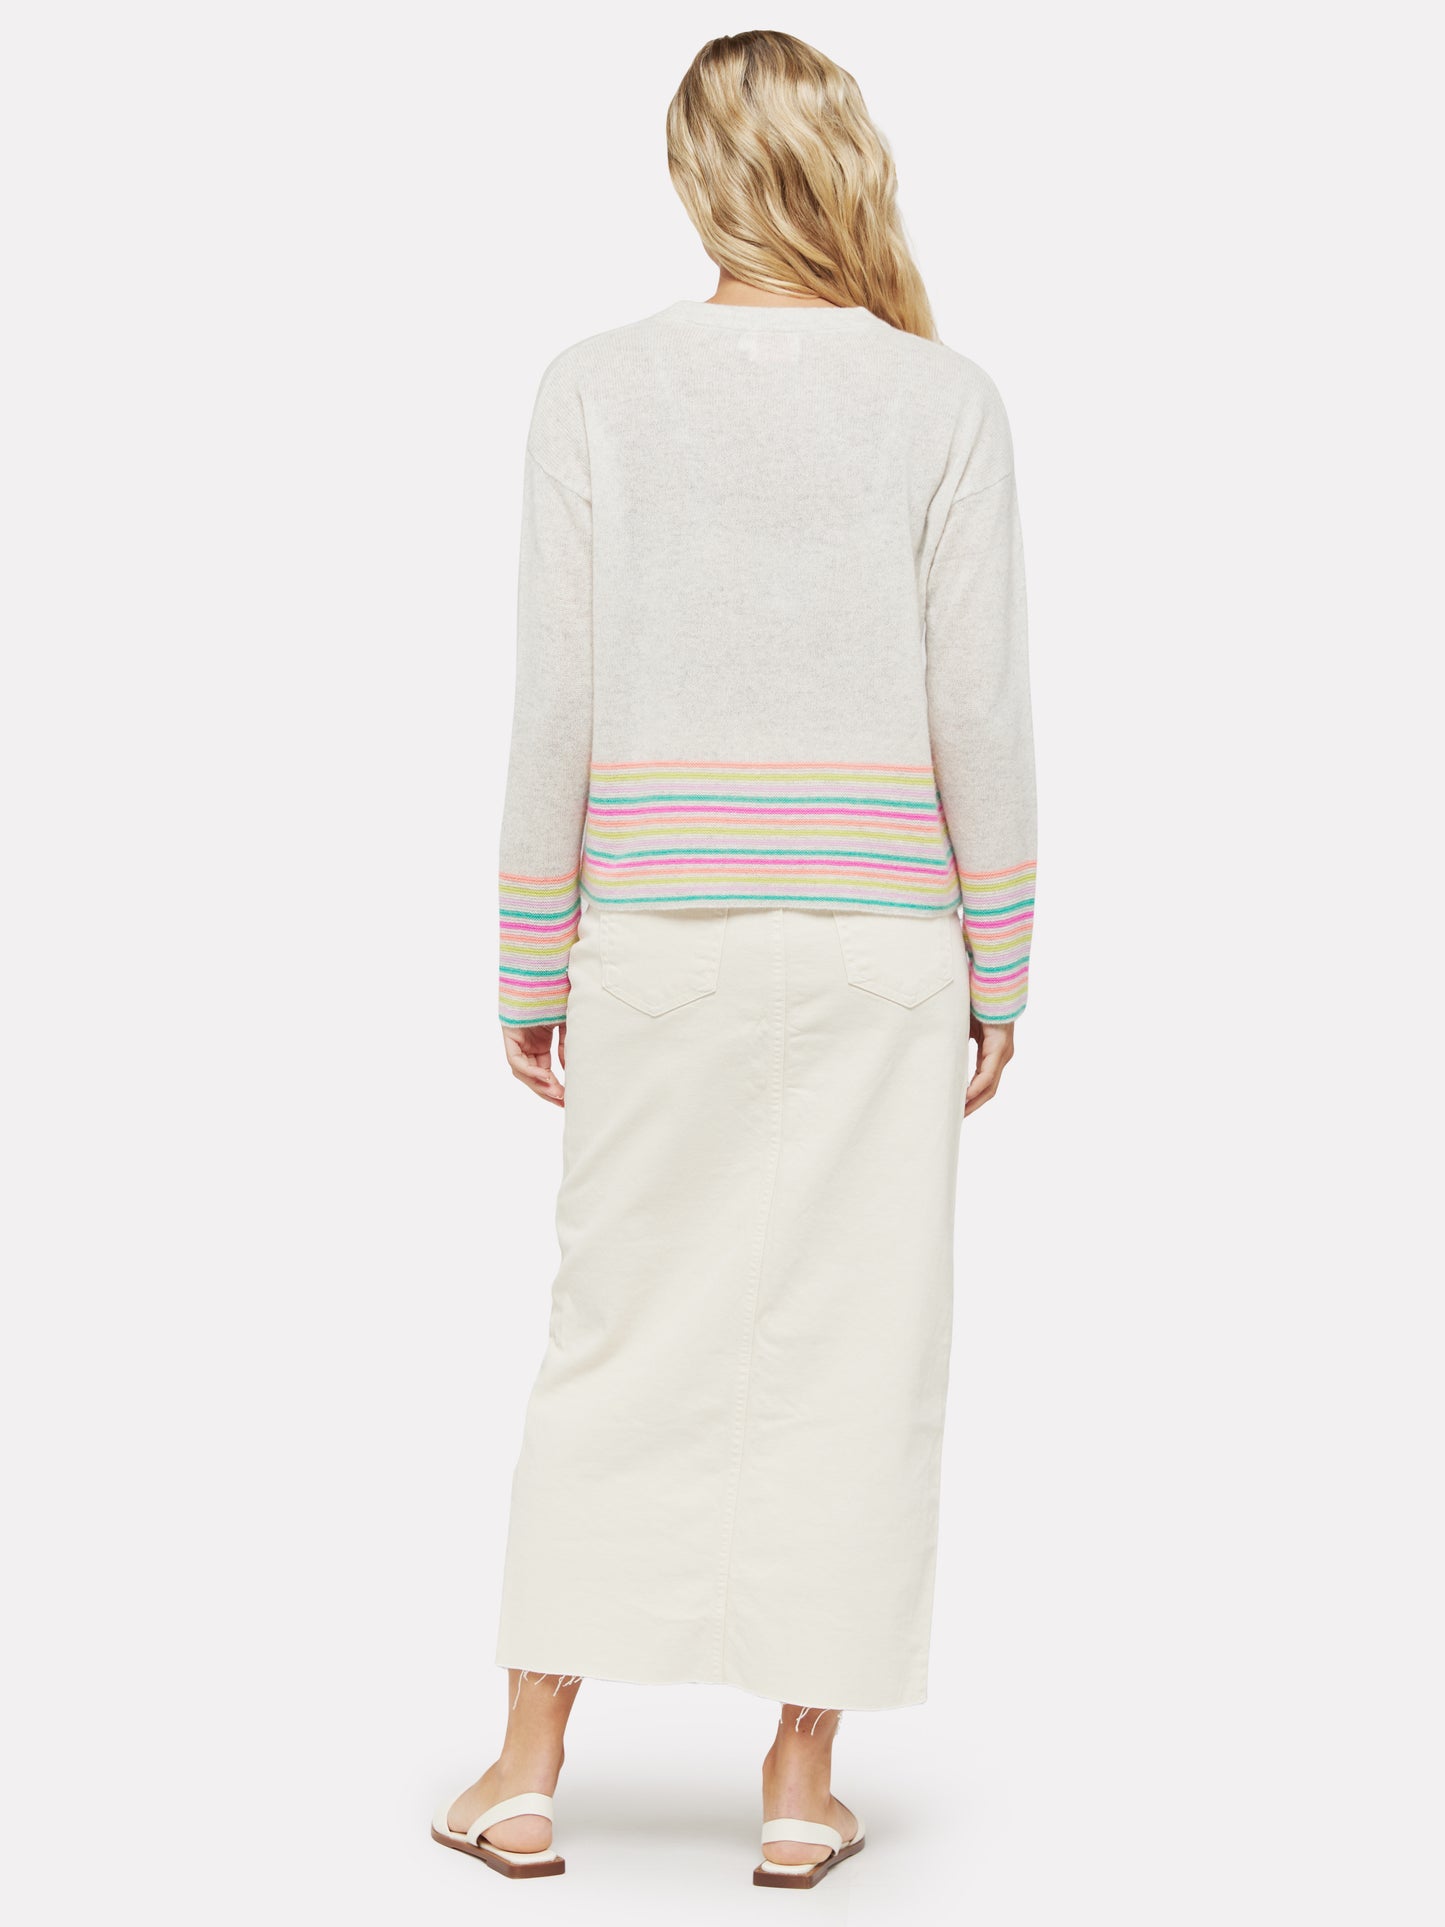 Stripe Pearl Cashmere Knit